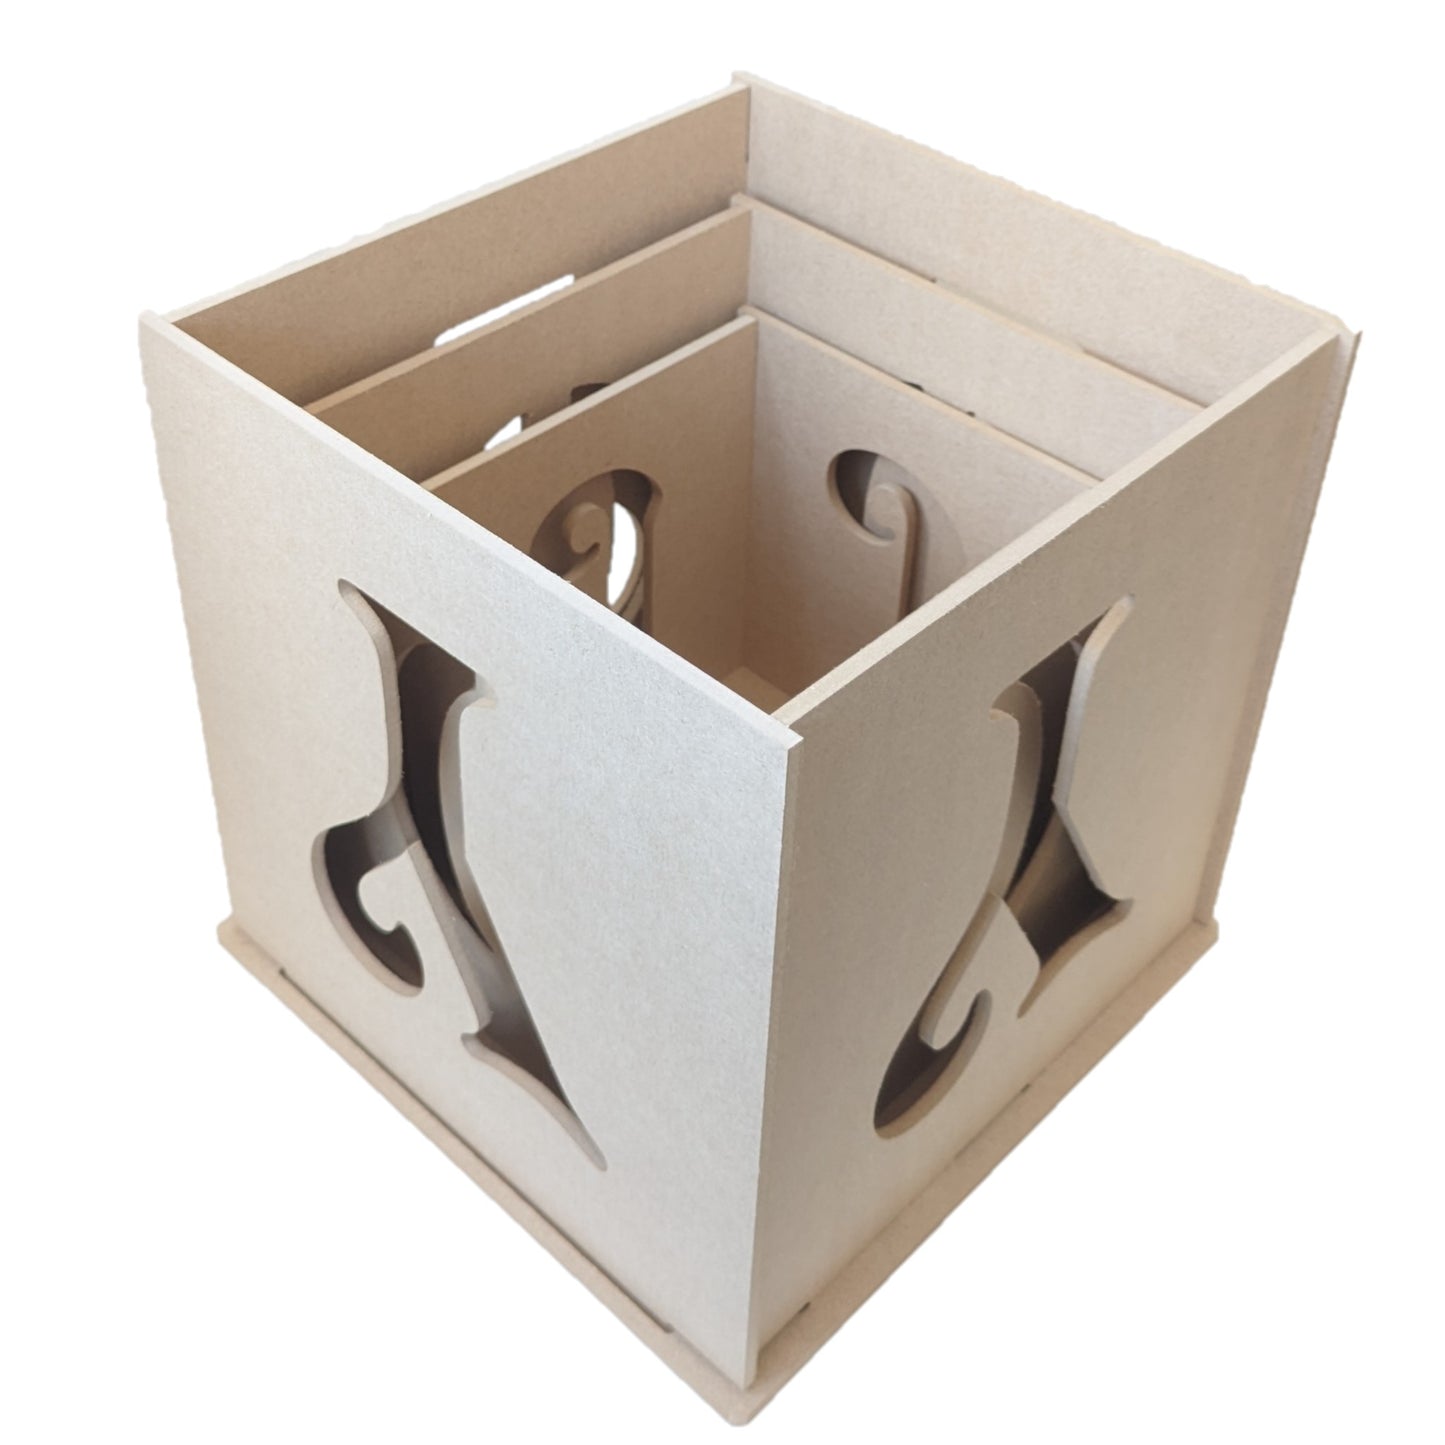 Collapsible Joy Boxes